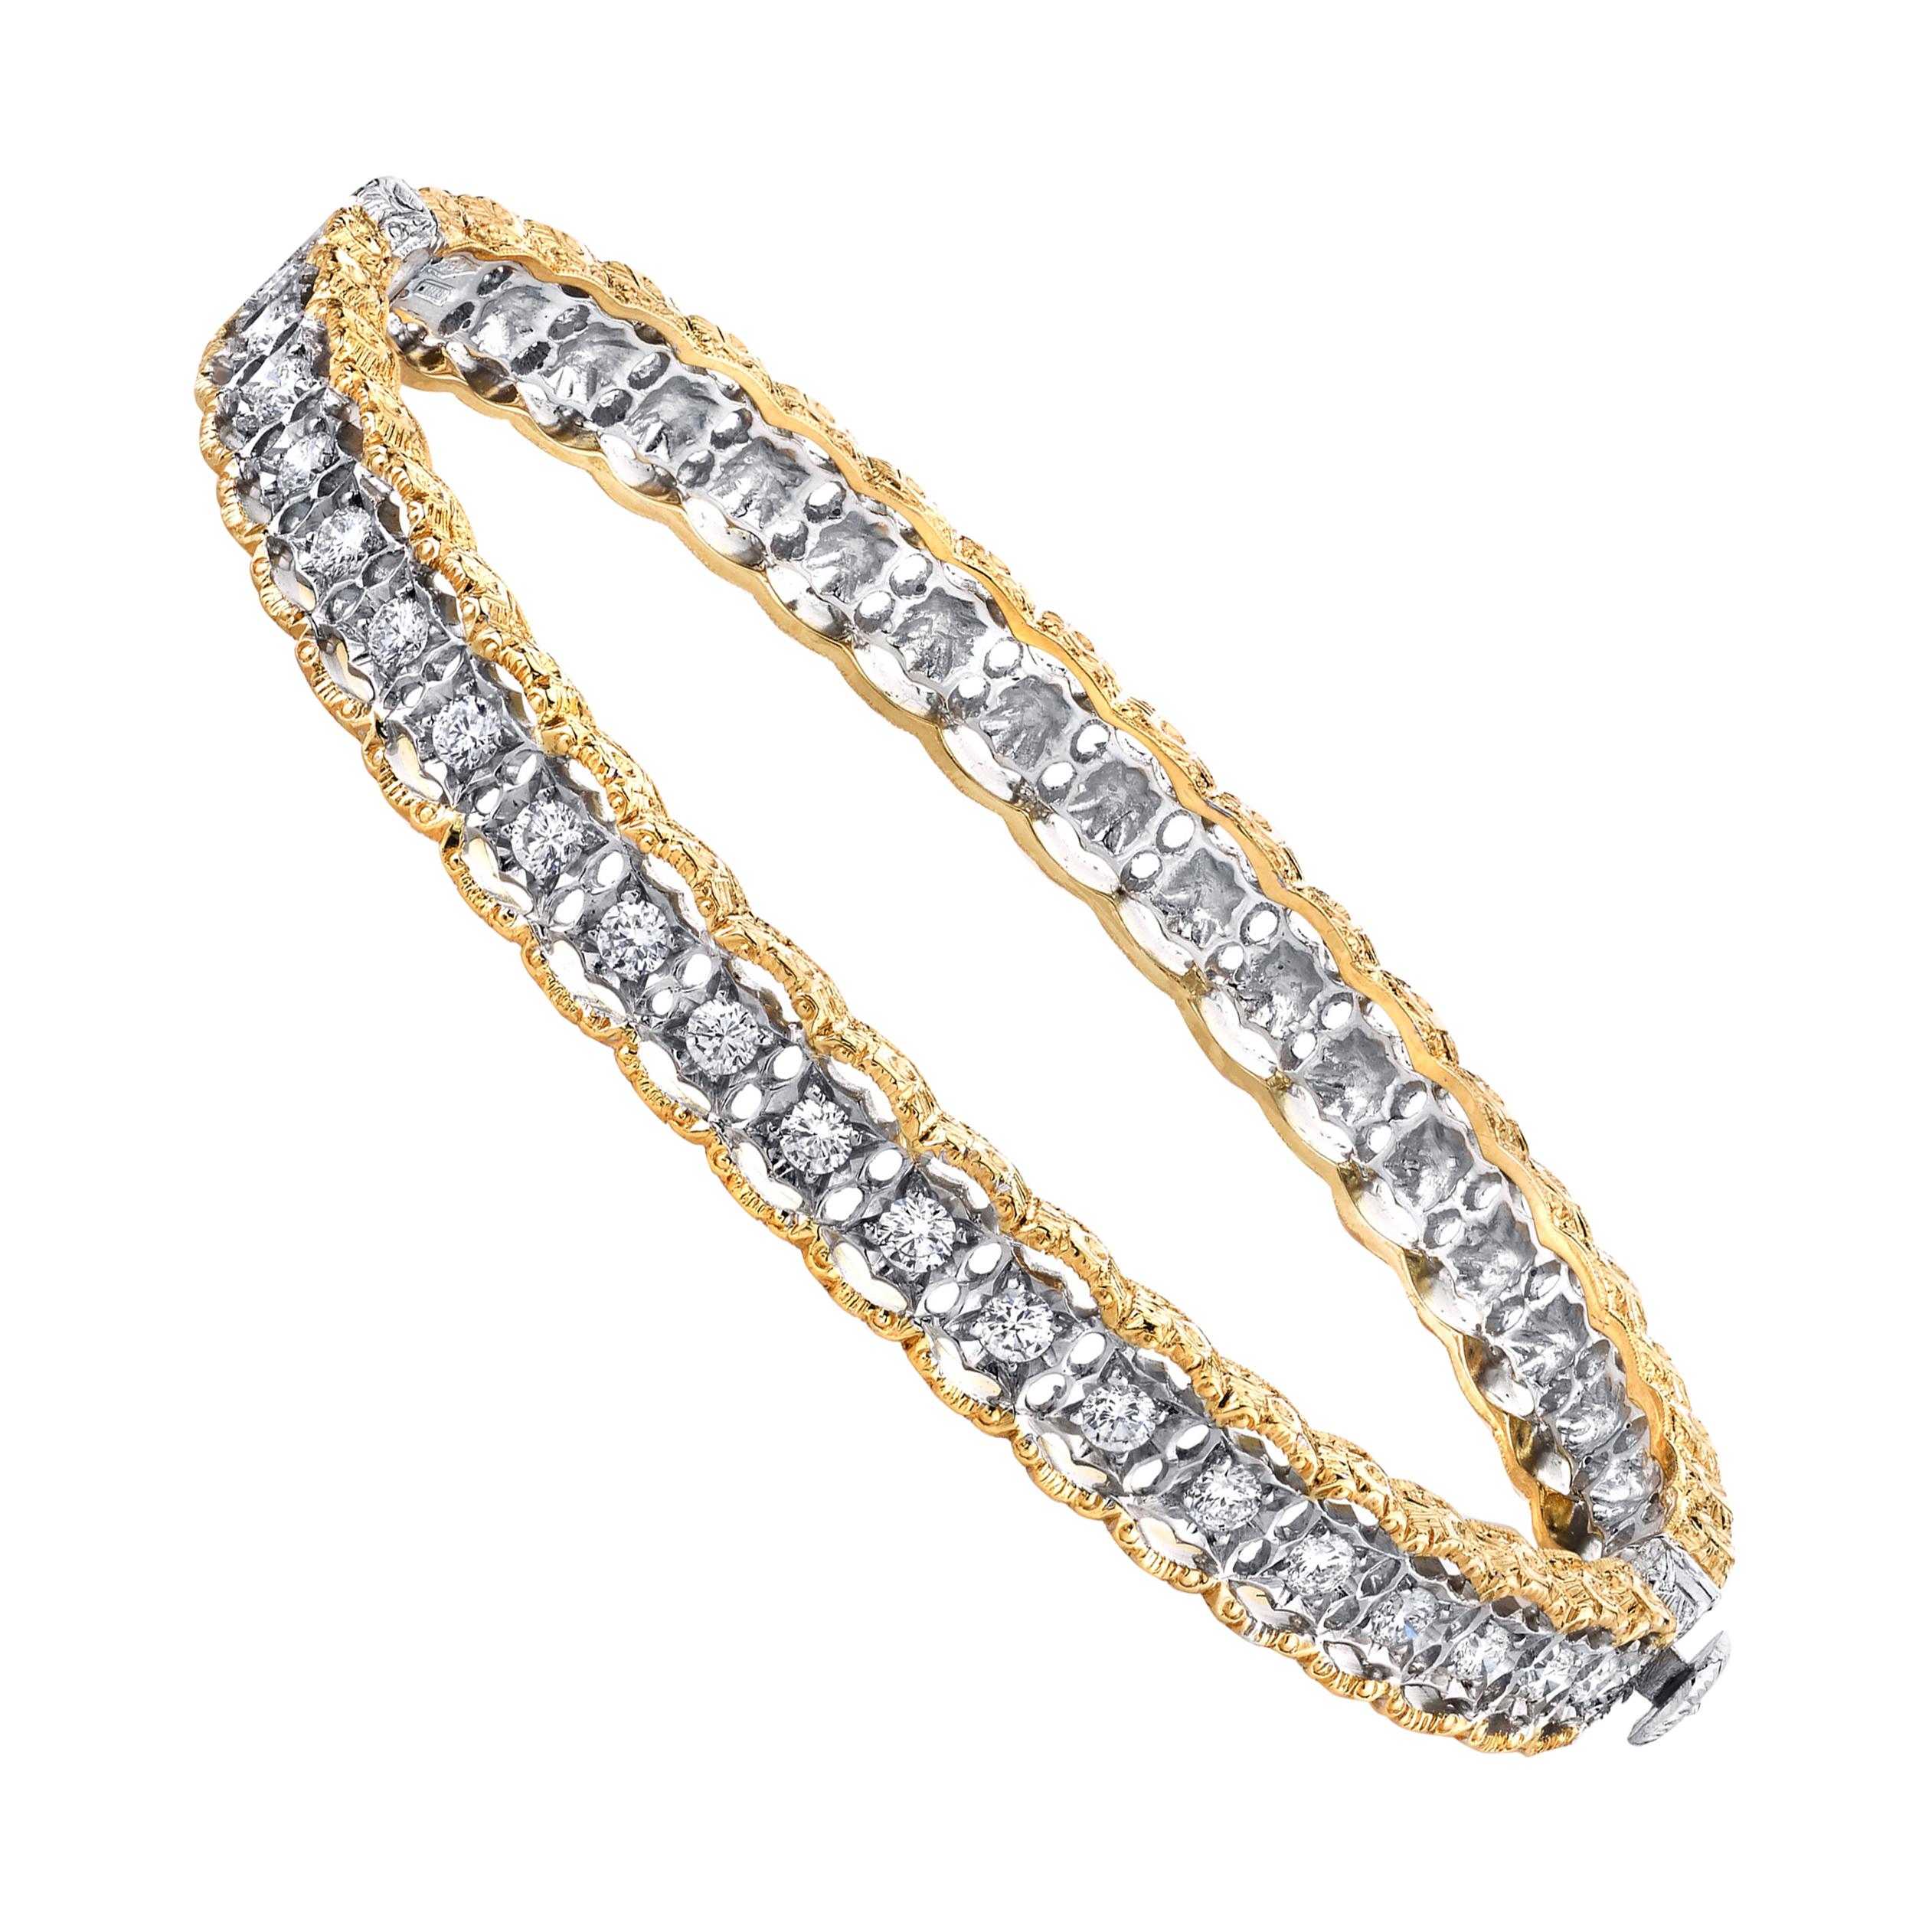 Florentine Style Diamond, Yellow, White Gold Bangle Bracelet, 1.00 Carat Total